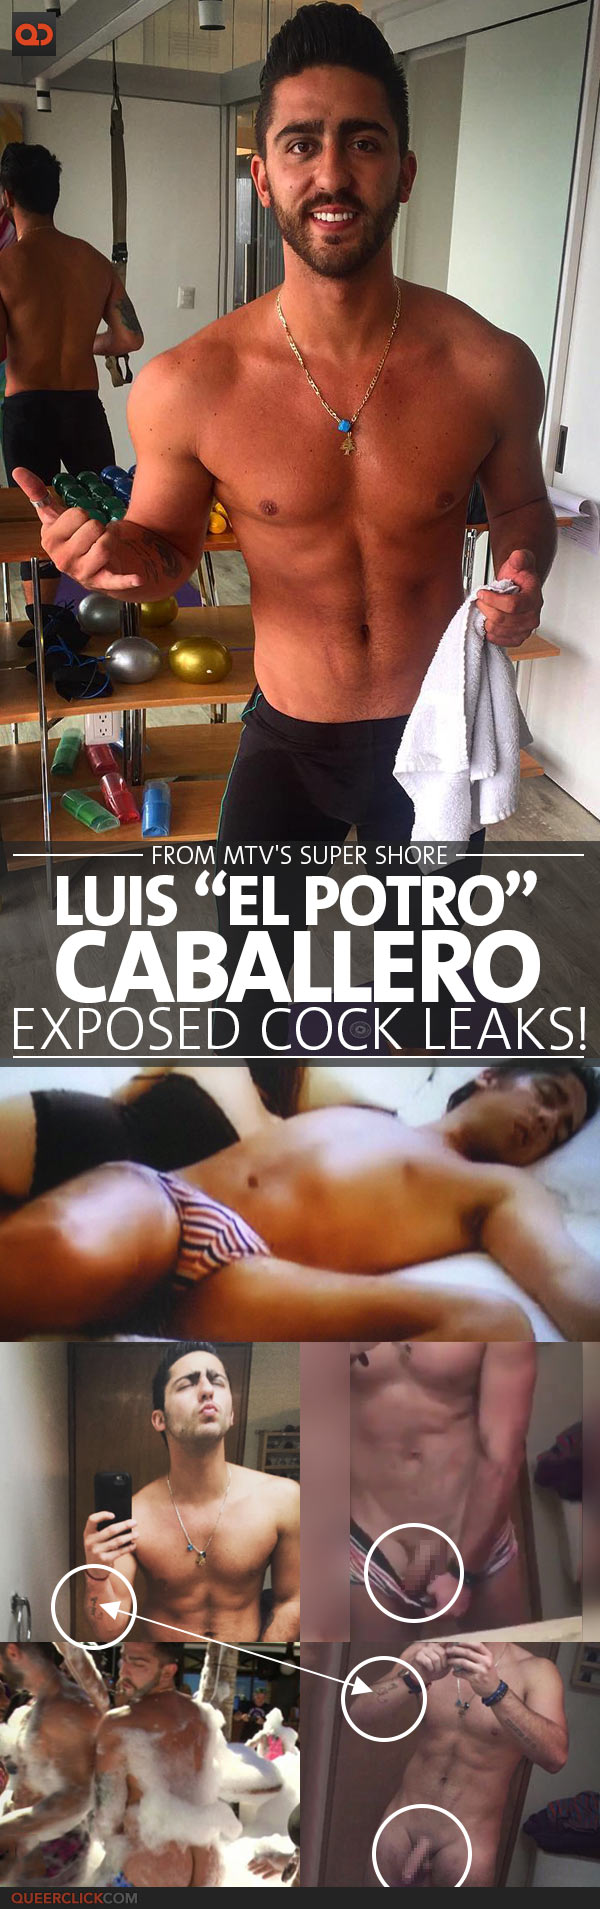 Luis “potro” Caballero, From MTV's Super Shore, Exposed Cock Leaks!